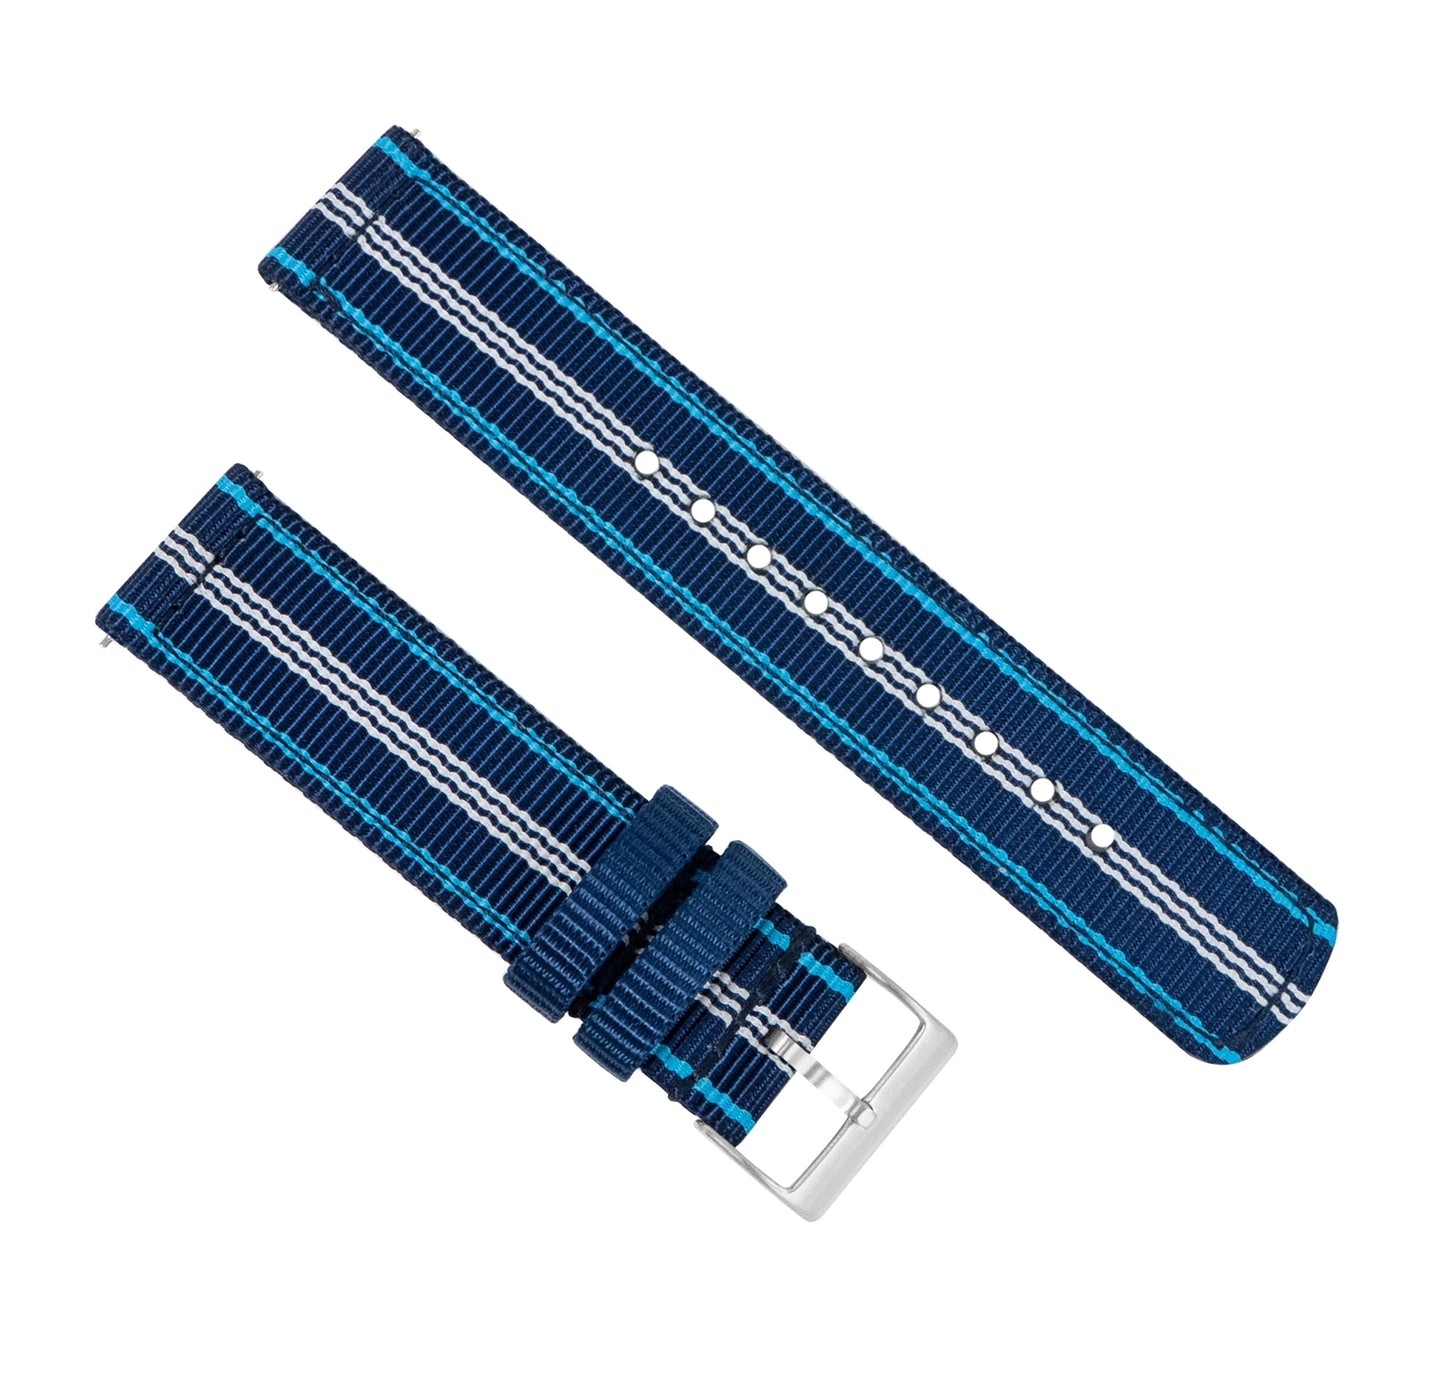 Samsung Galaxy Watch | Two-Piece NATO Style | Navy & Aqua Blue - Barton Watch Bands